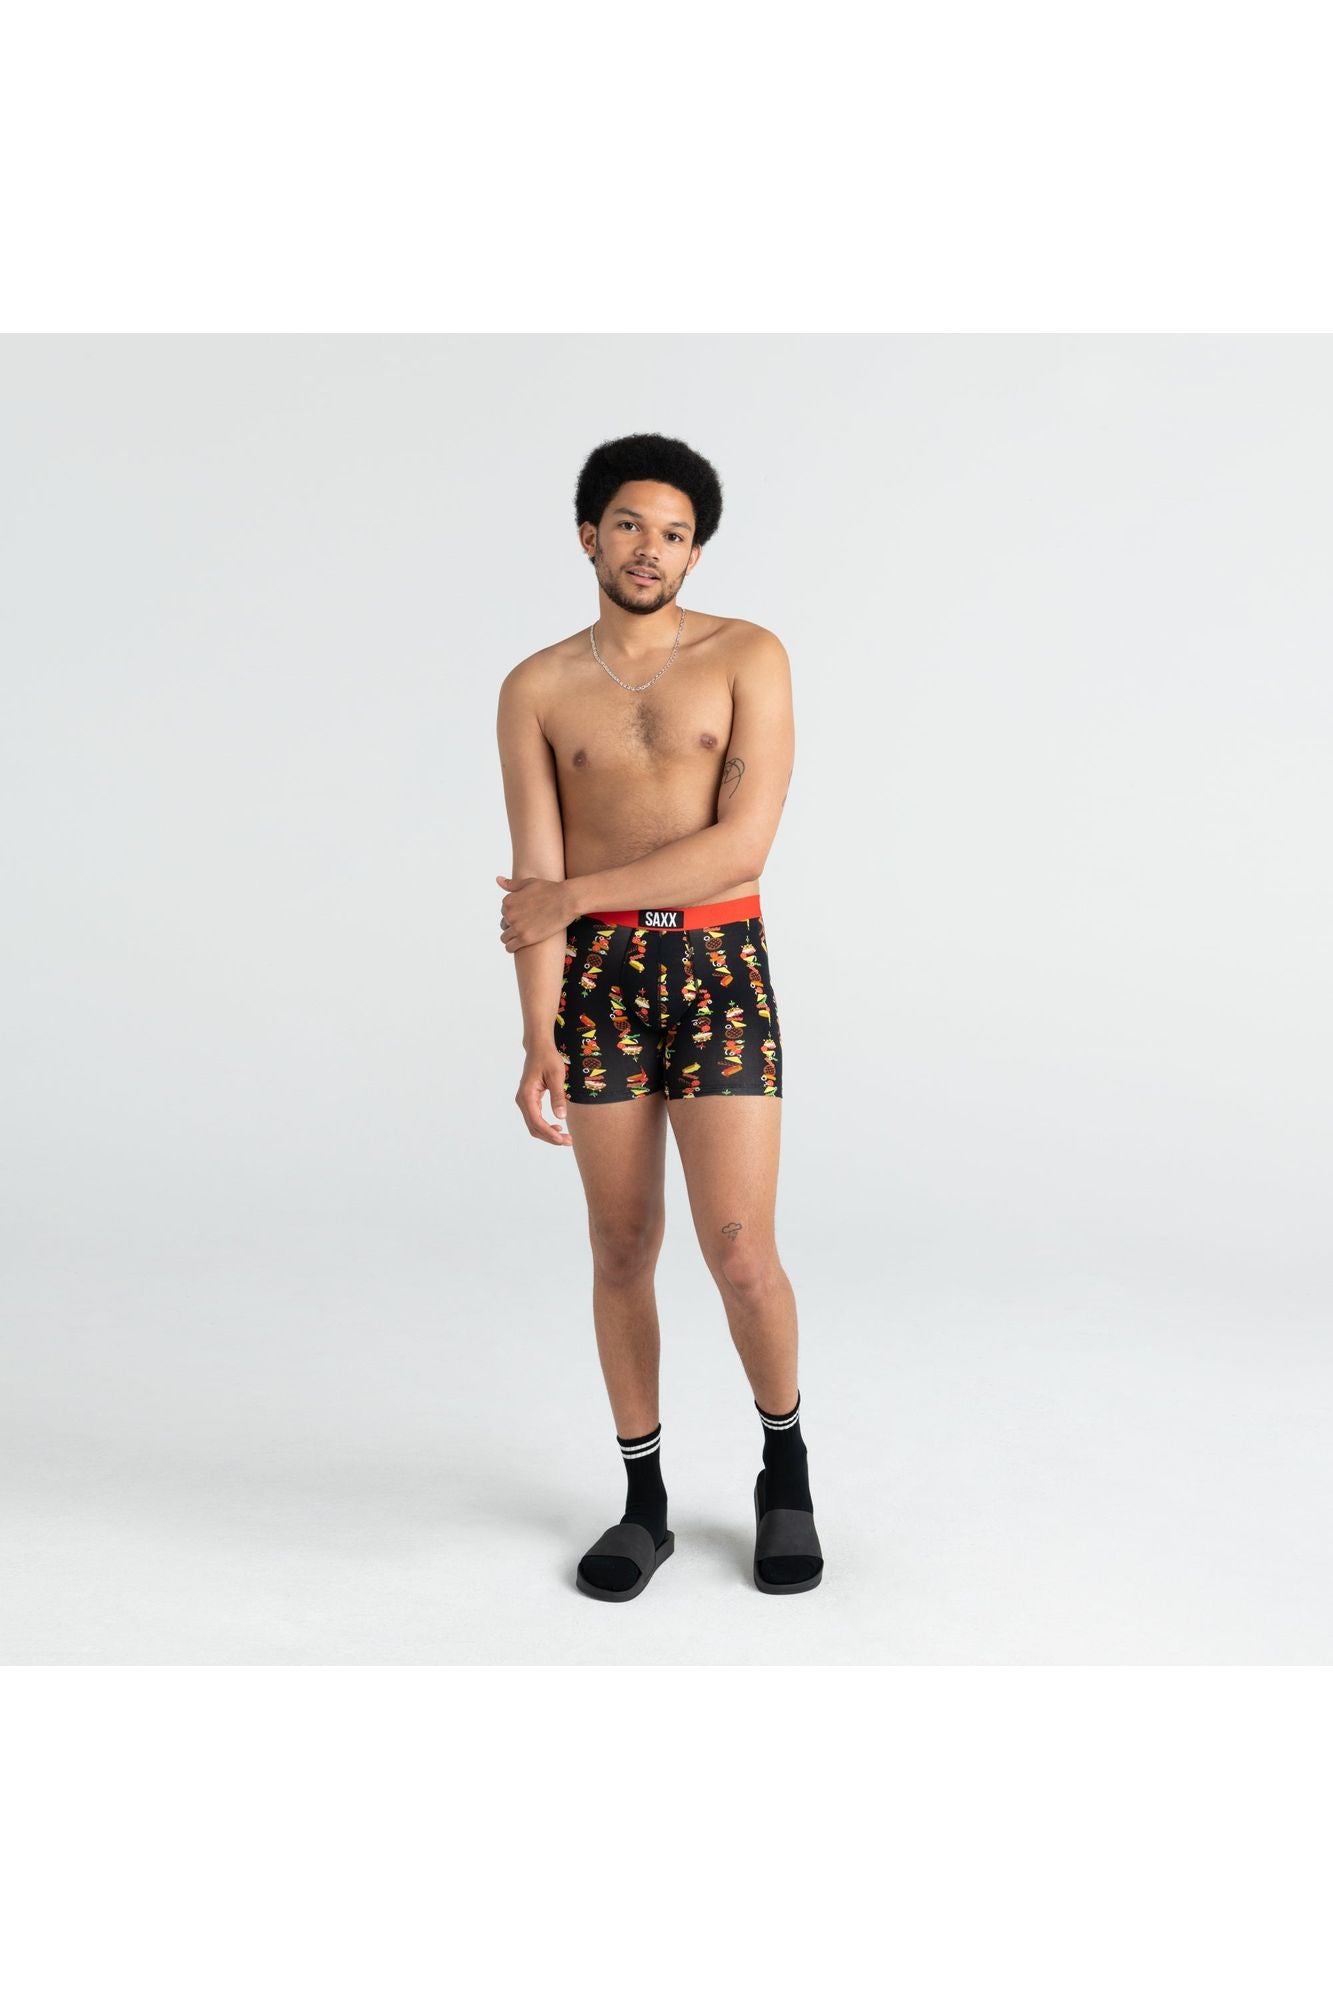  SAXX Mens Underwear - Vibe Super Soft Boxer Brief 2 Pack